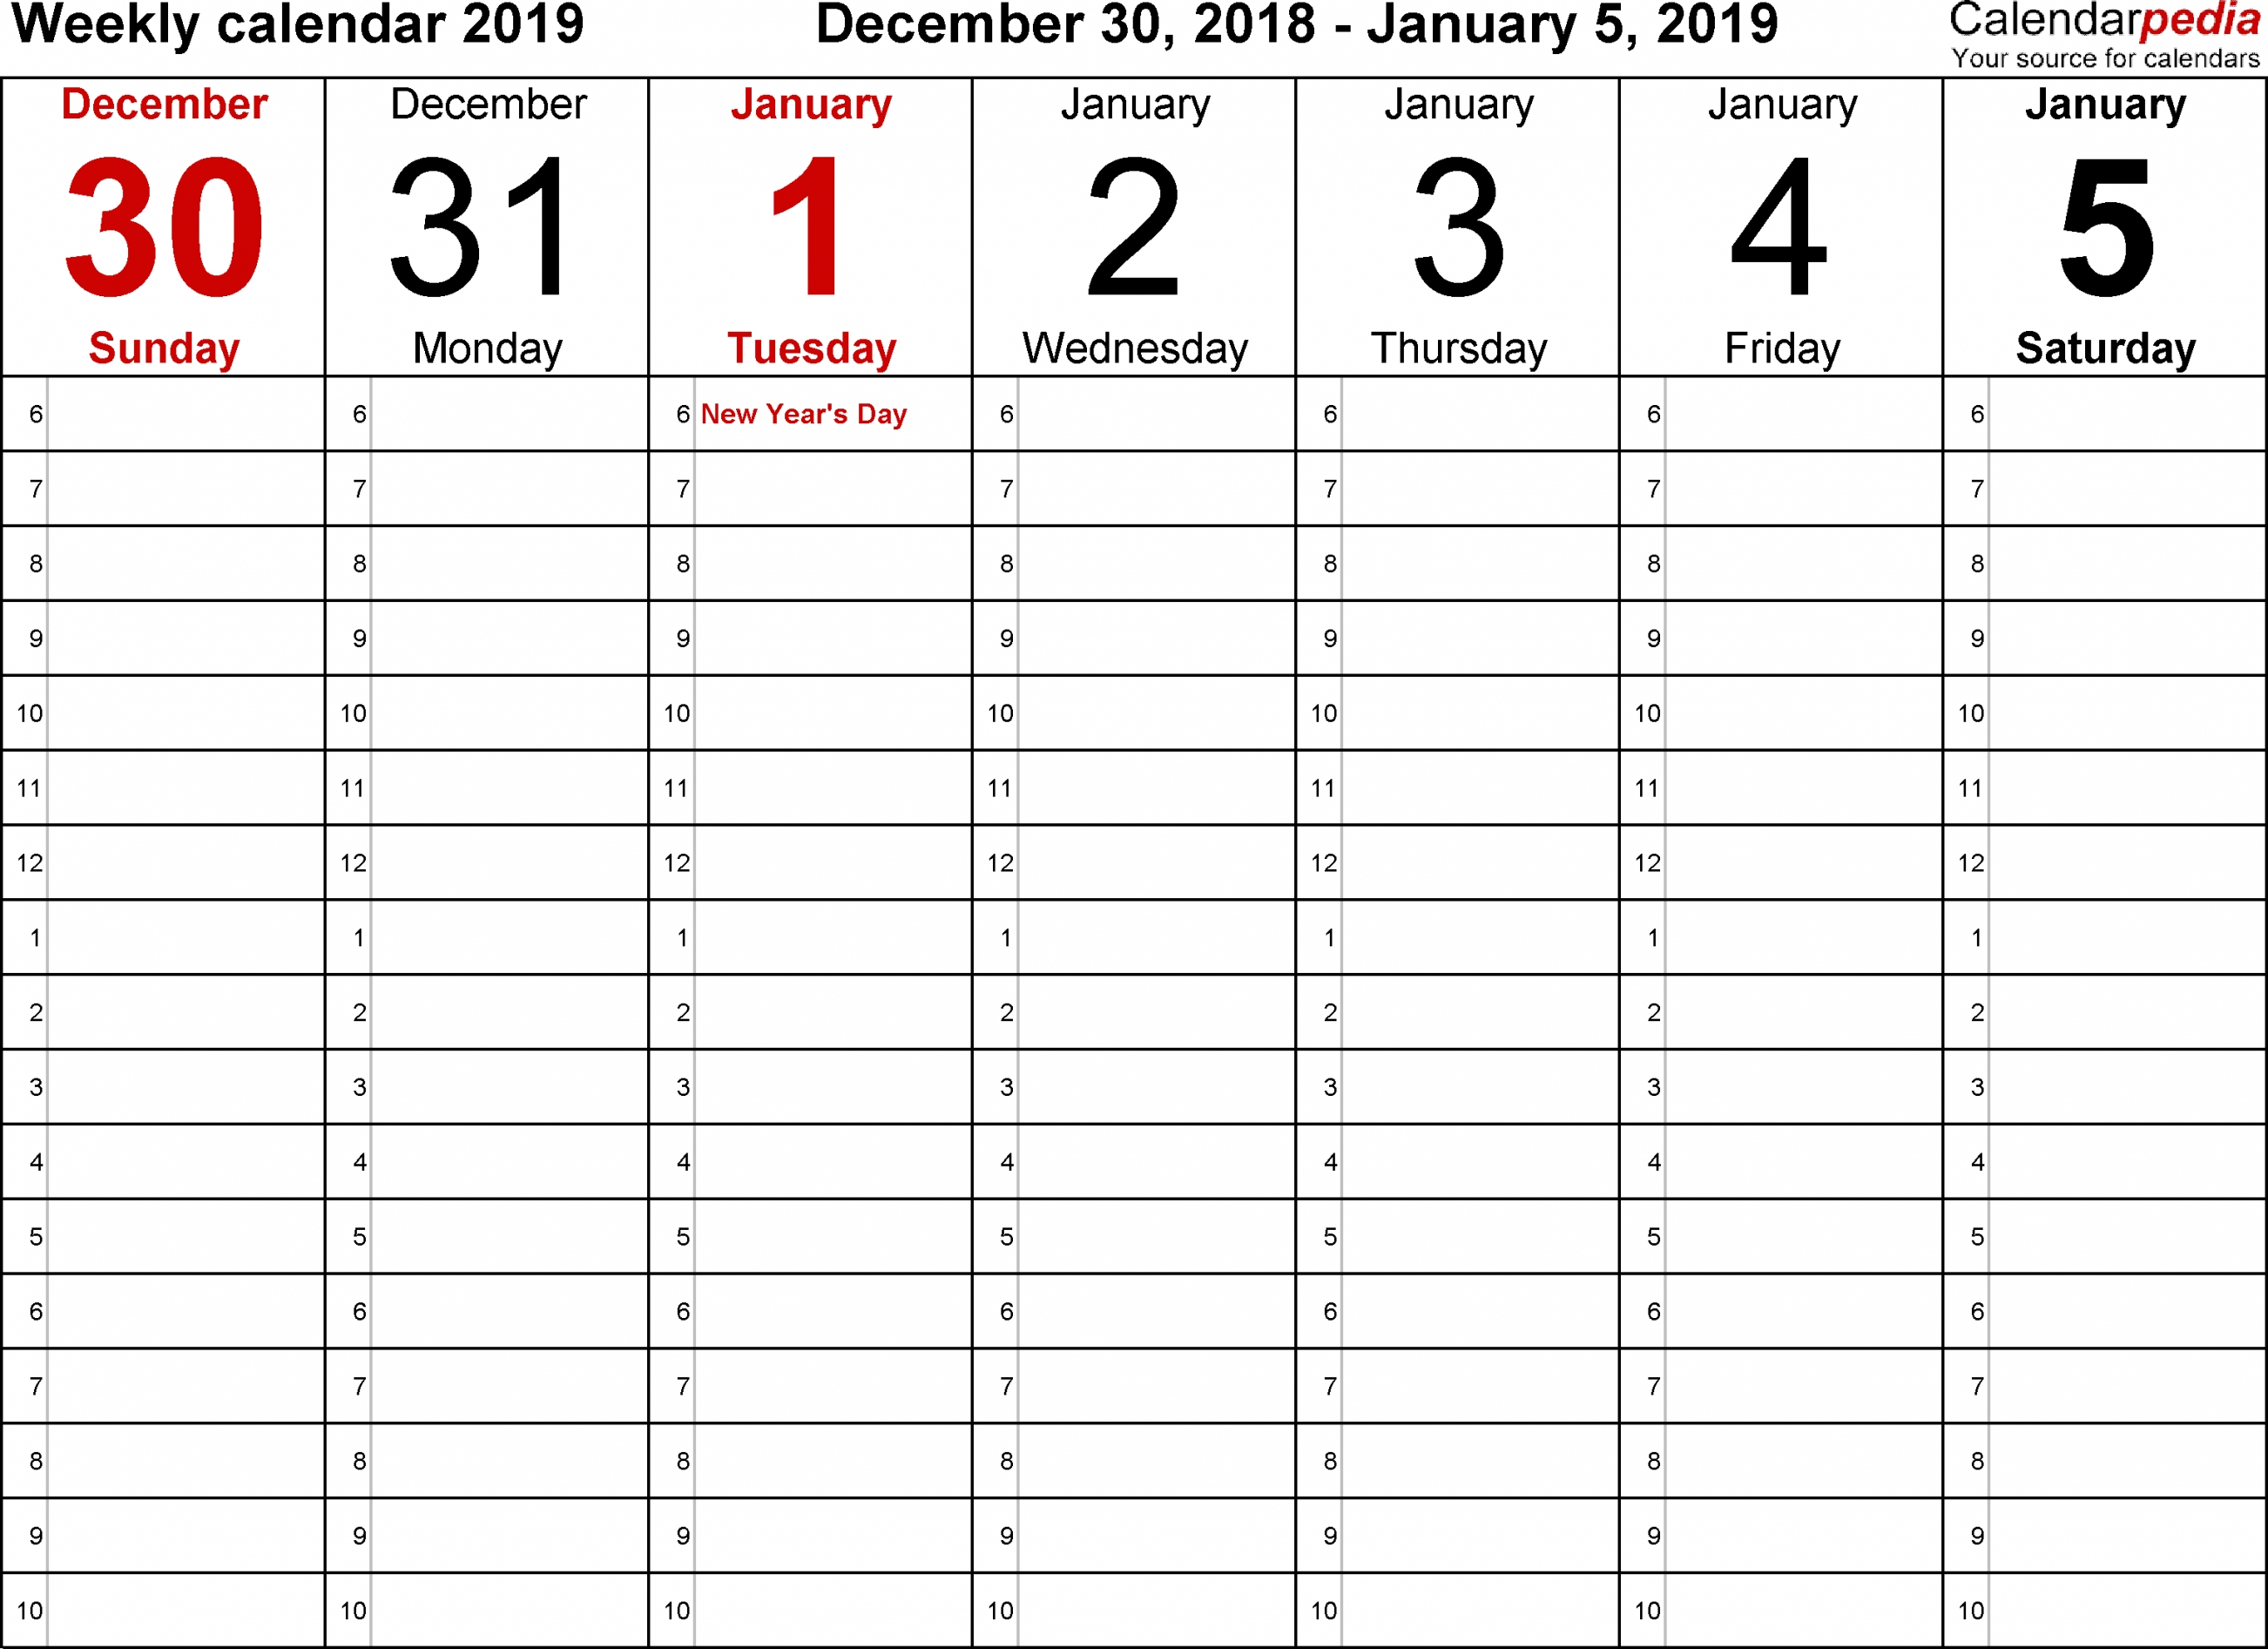 Weekly Calendar 2019 For Word – 12 Free Printable Templates Daily with Daily Calendars Free Printable Editable